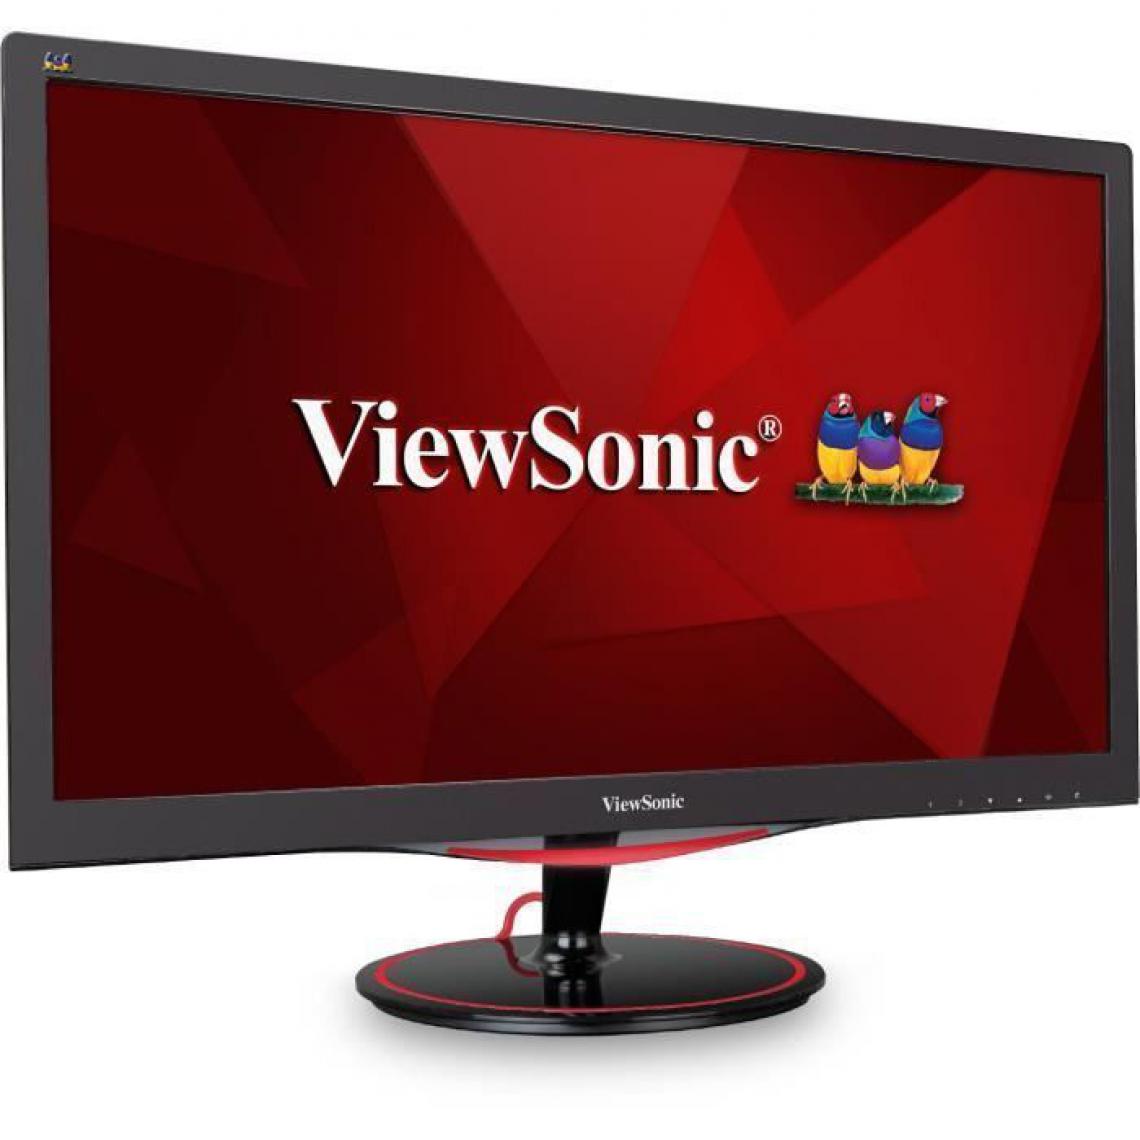 Viewsonic - Ecran Gaming FreeSync VIEWSONIC VX2458-MHD - 24 POUCES - 1 ms - 144HZ - 2 HDMI - Black stabilisation - Moniteur PC